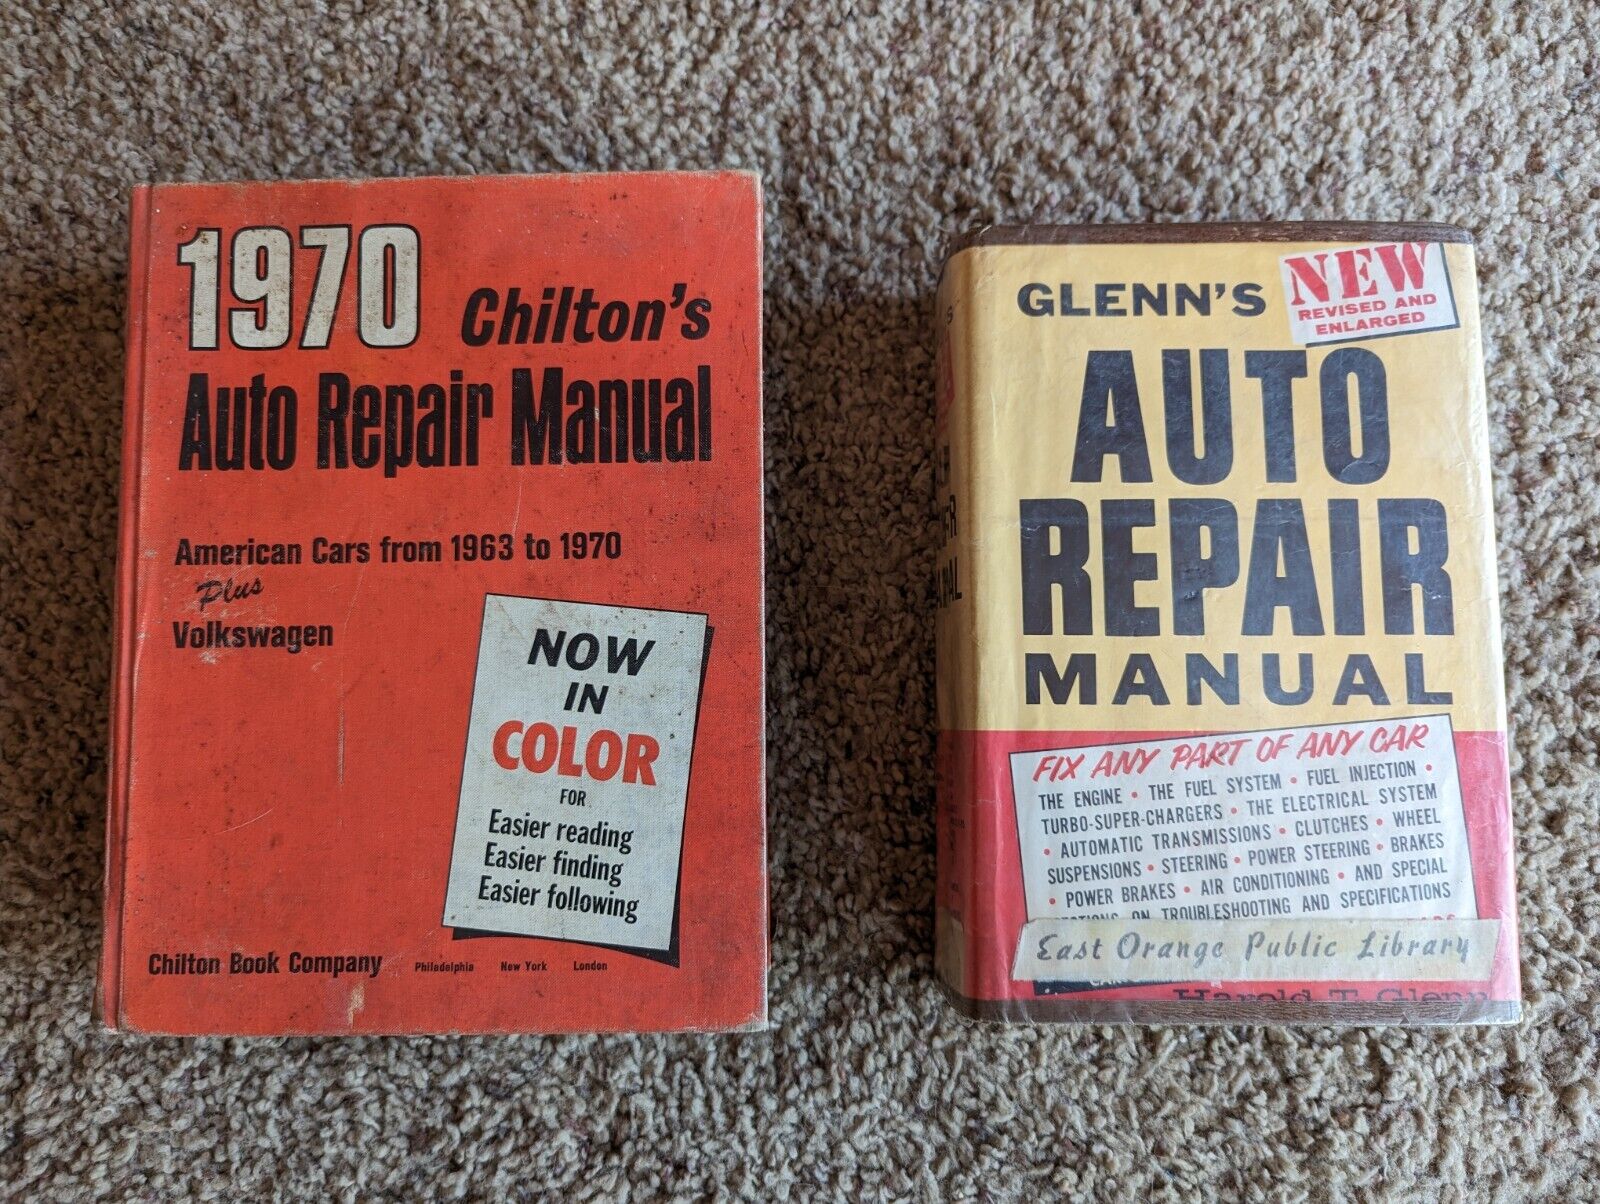 Classic Auto Repair Manual two book lot- 1970 Chilton's & 1964 Glenn's